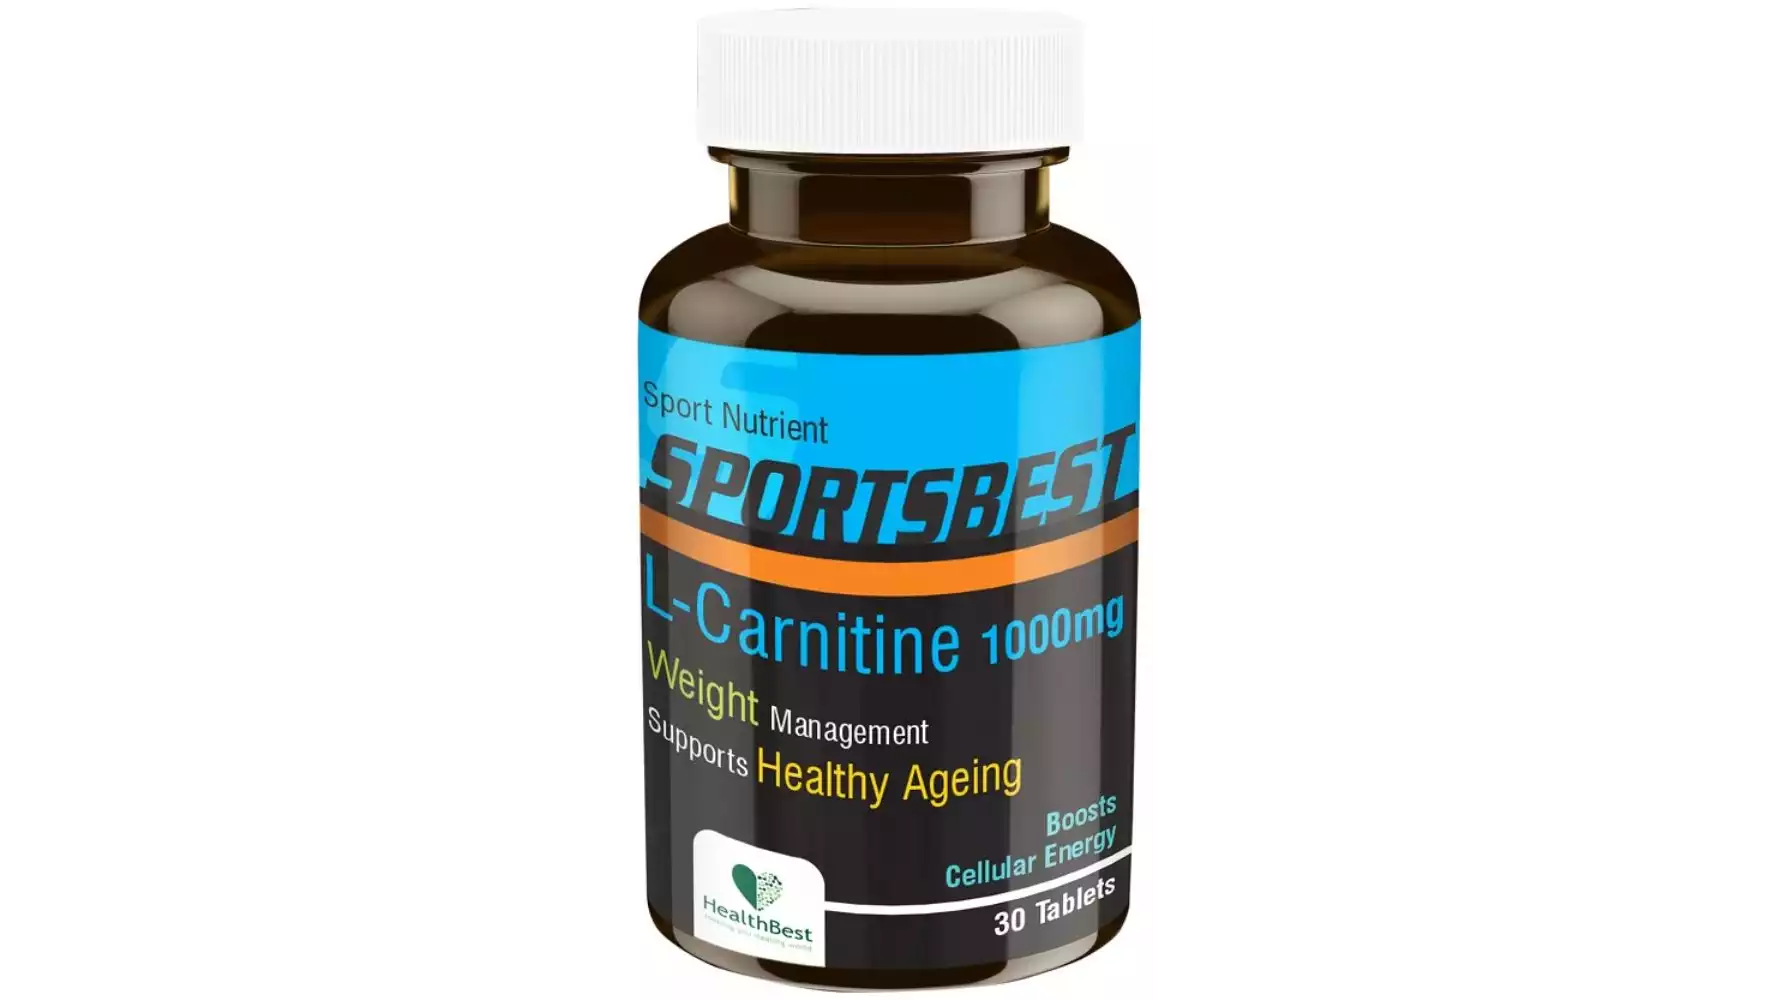 HealthBest Sportsbest L-Carnitine Supplement 1000Mg (60caps)